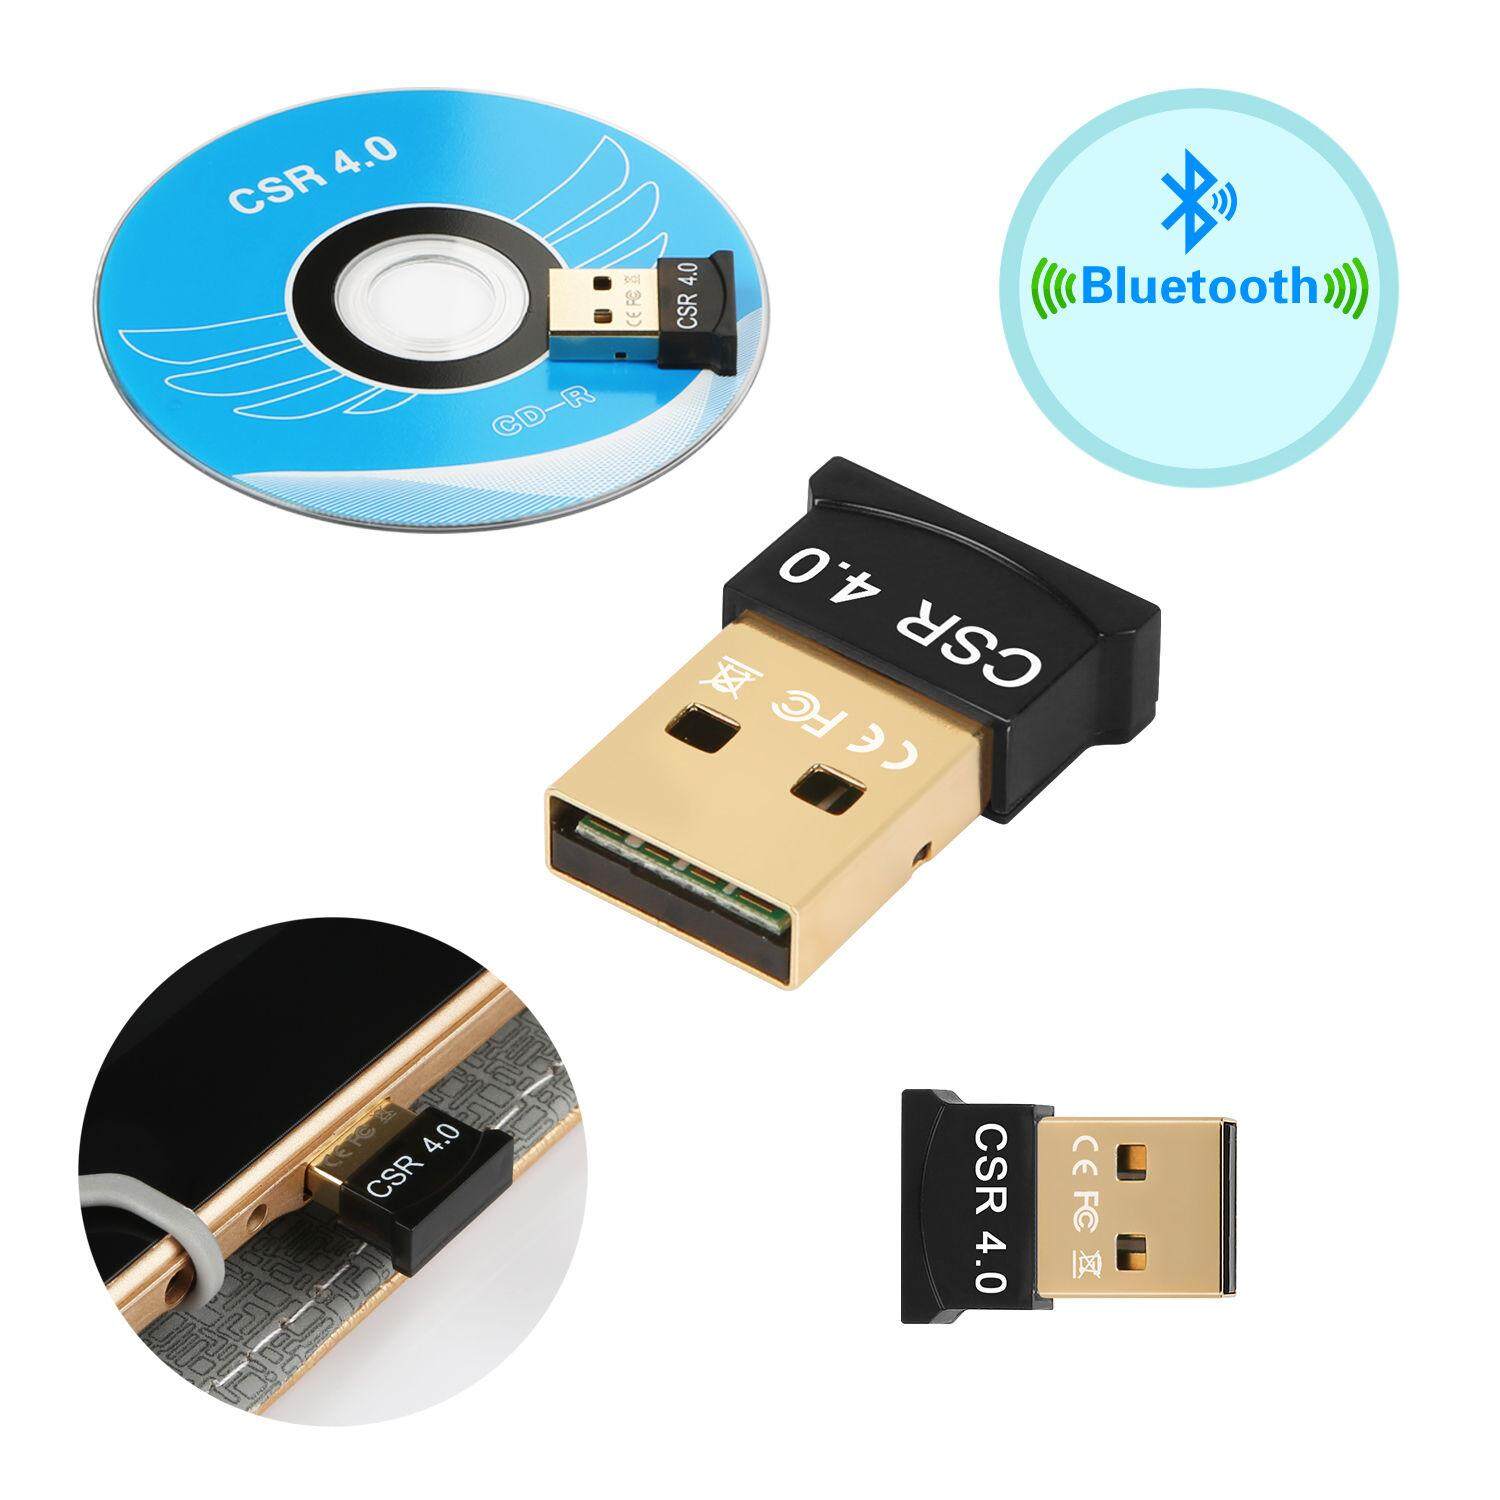 Mini USB Bluetooth Adapter V4.0 Dual Mode High Speed Wireless Bluetooth Dongle CSR 4.0 USB 2.0/3.0 For Windows 10/8/7/Vista/XP รุ่น MG1001 (Black)